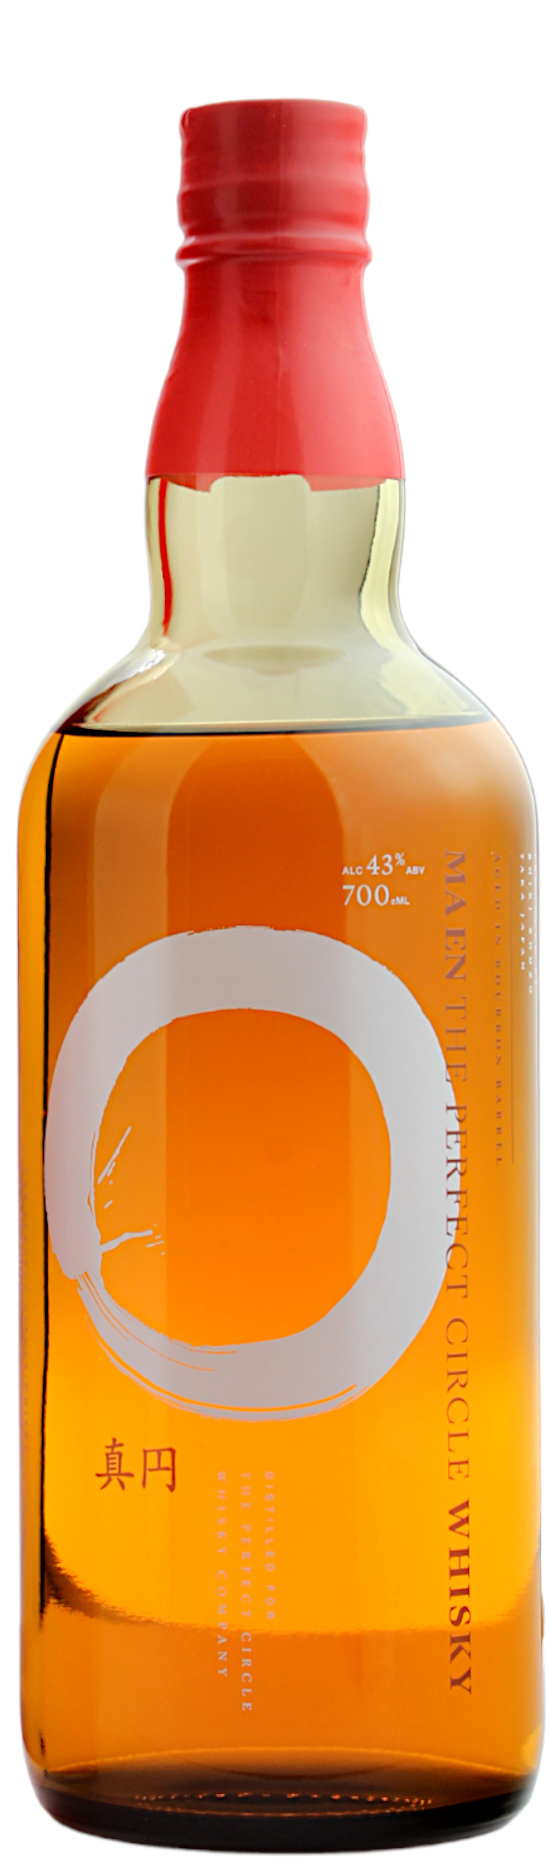 Maen Perfect Circle Japanese Whisky 43.0% 0,7l